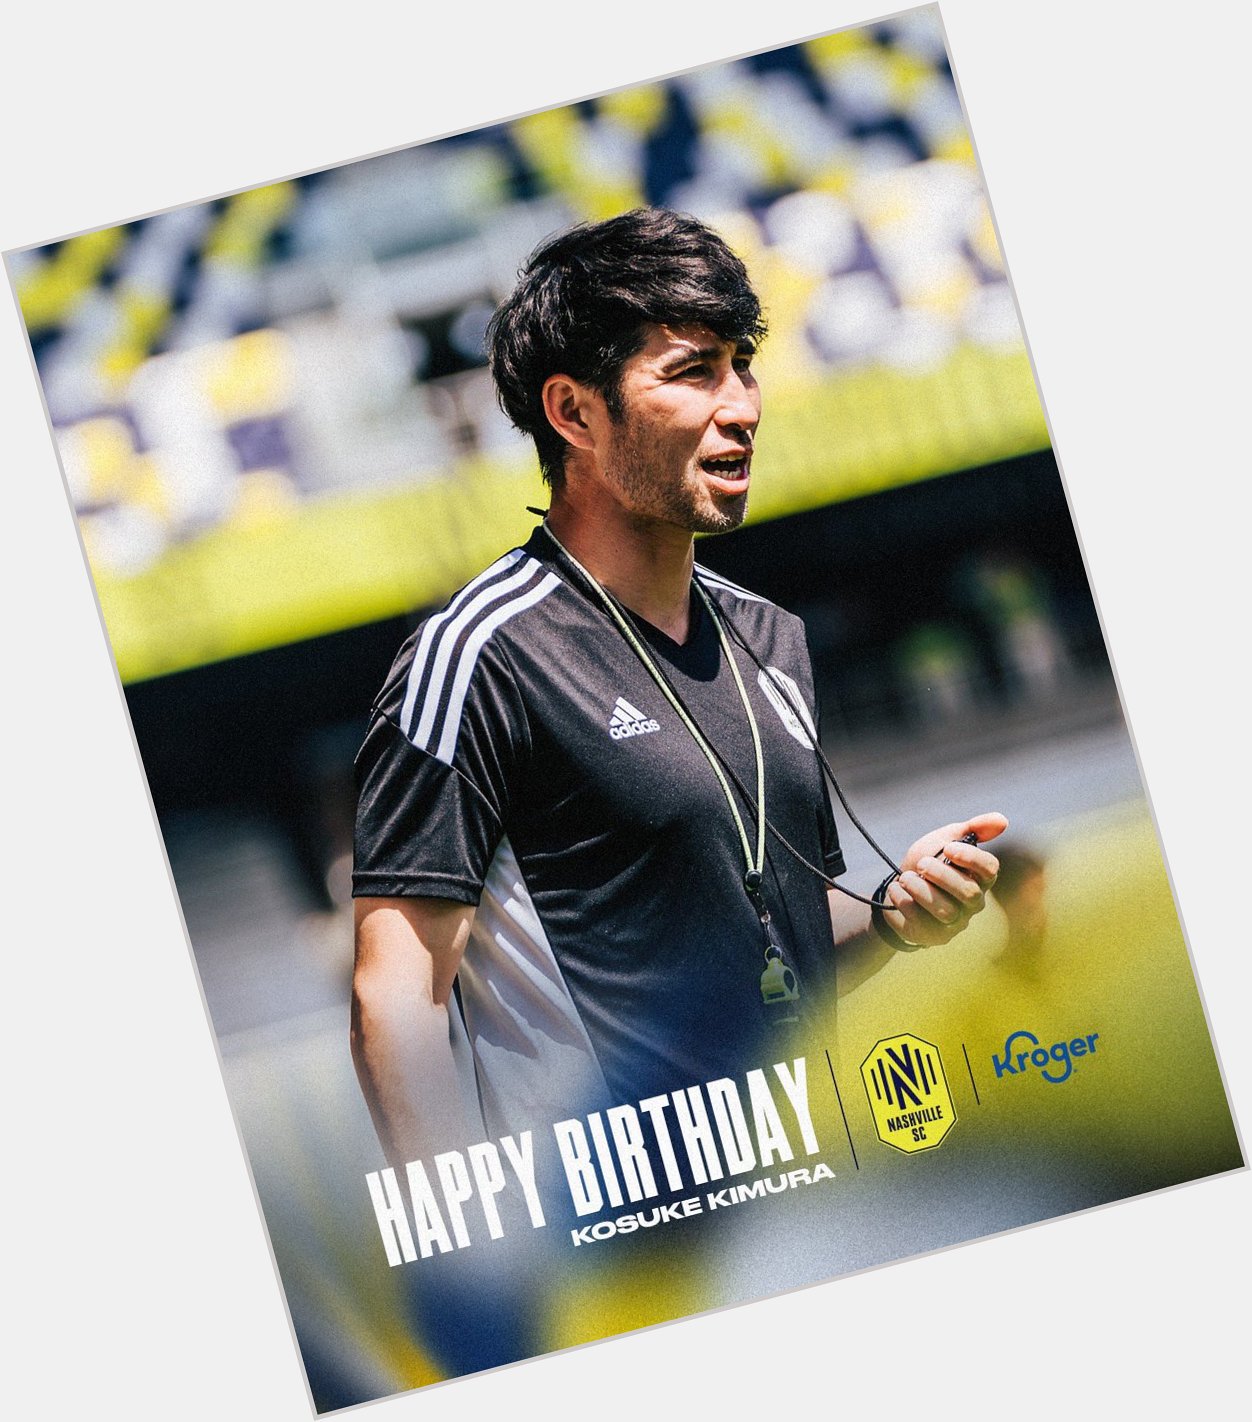 Happy Birthday to assistant coach Kosuke Kimura! | 